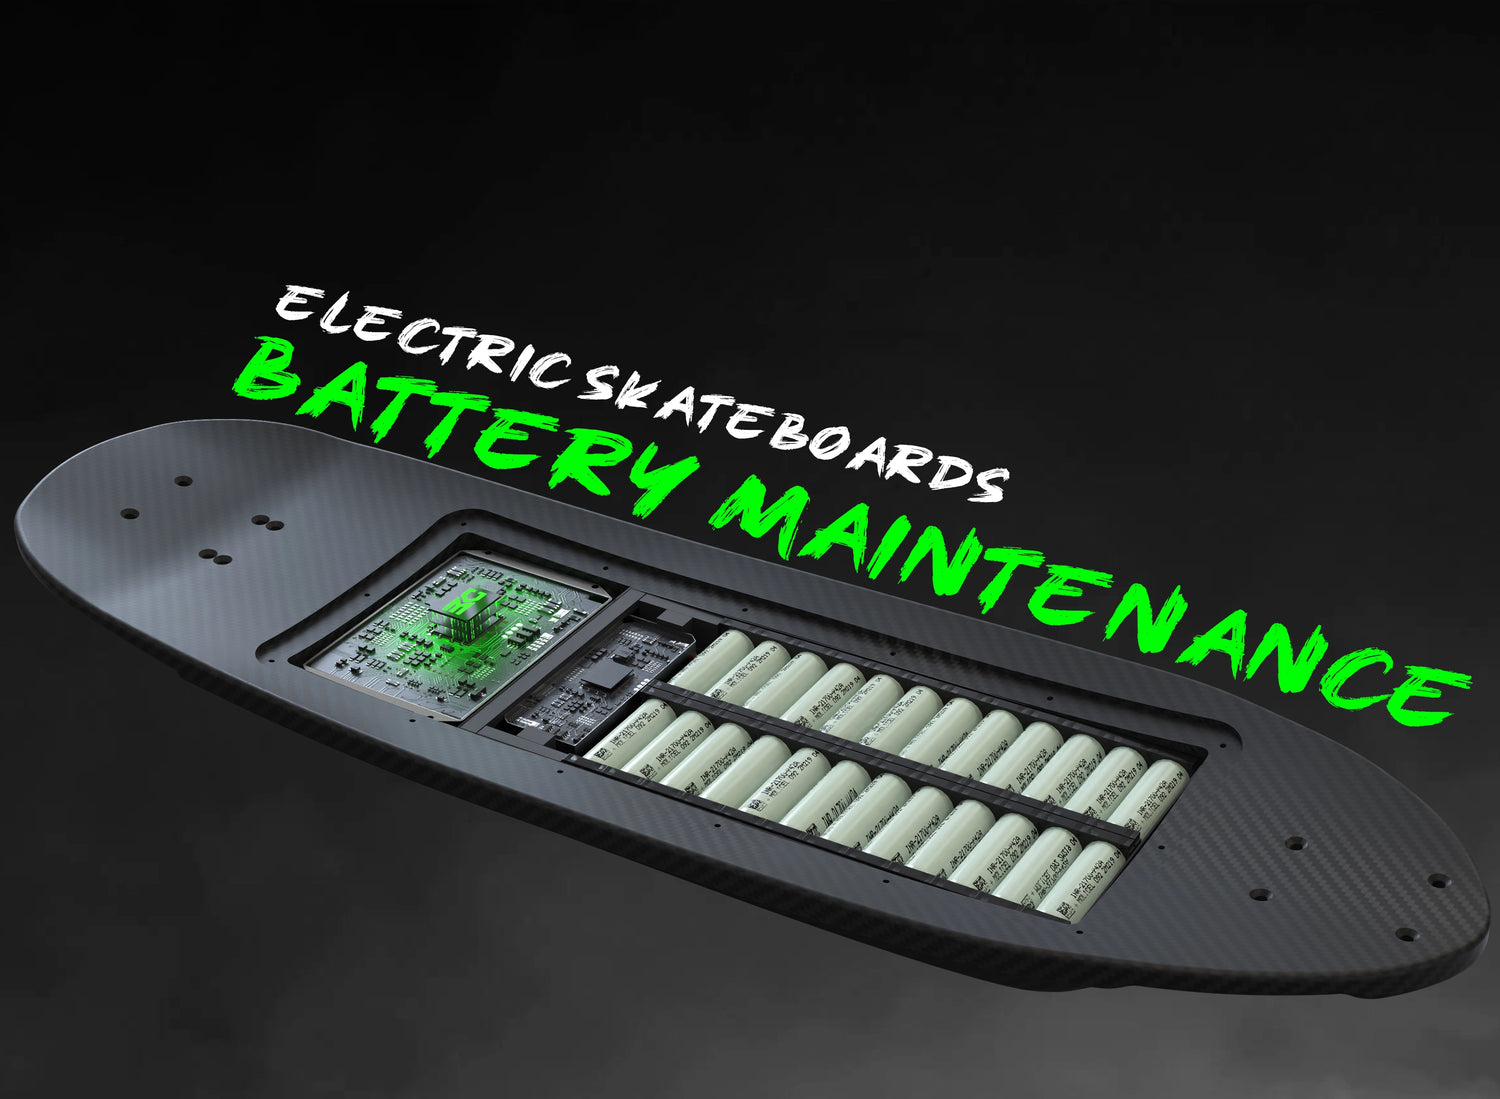 Electric Skateboard Battery